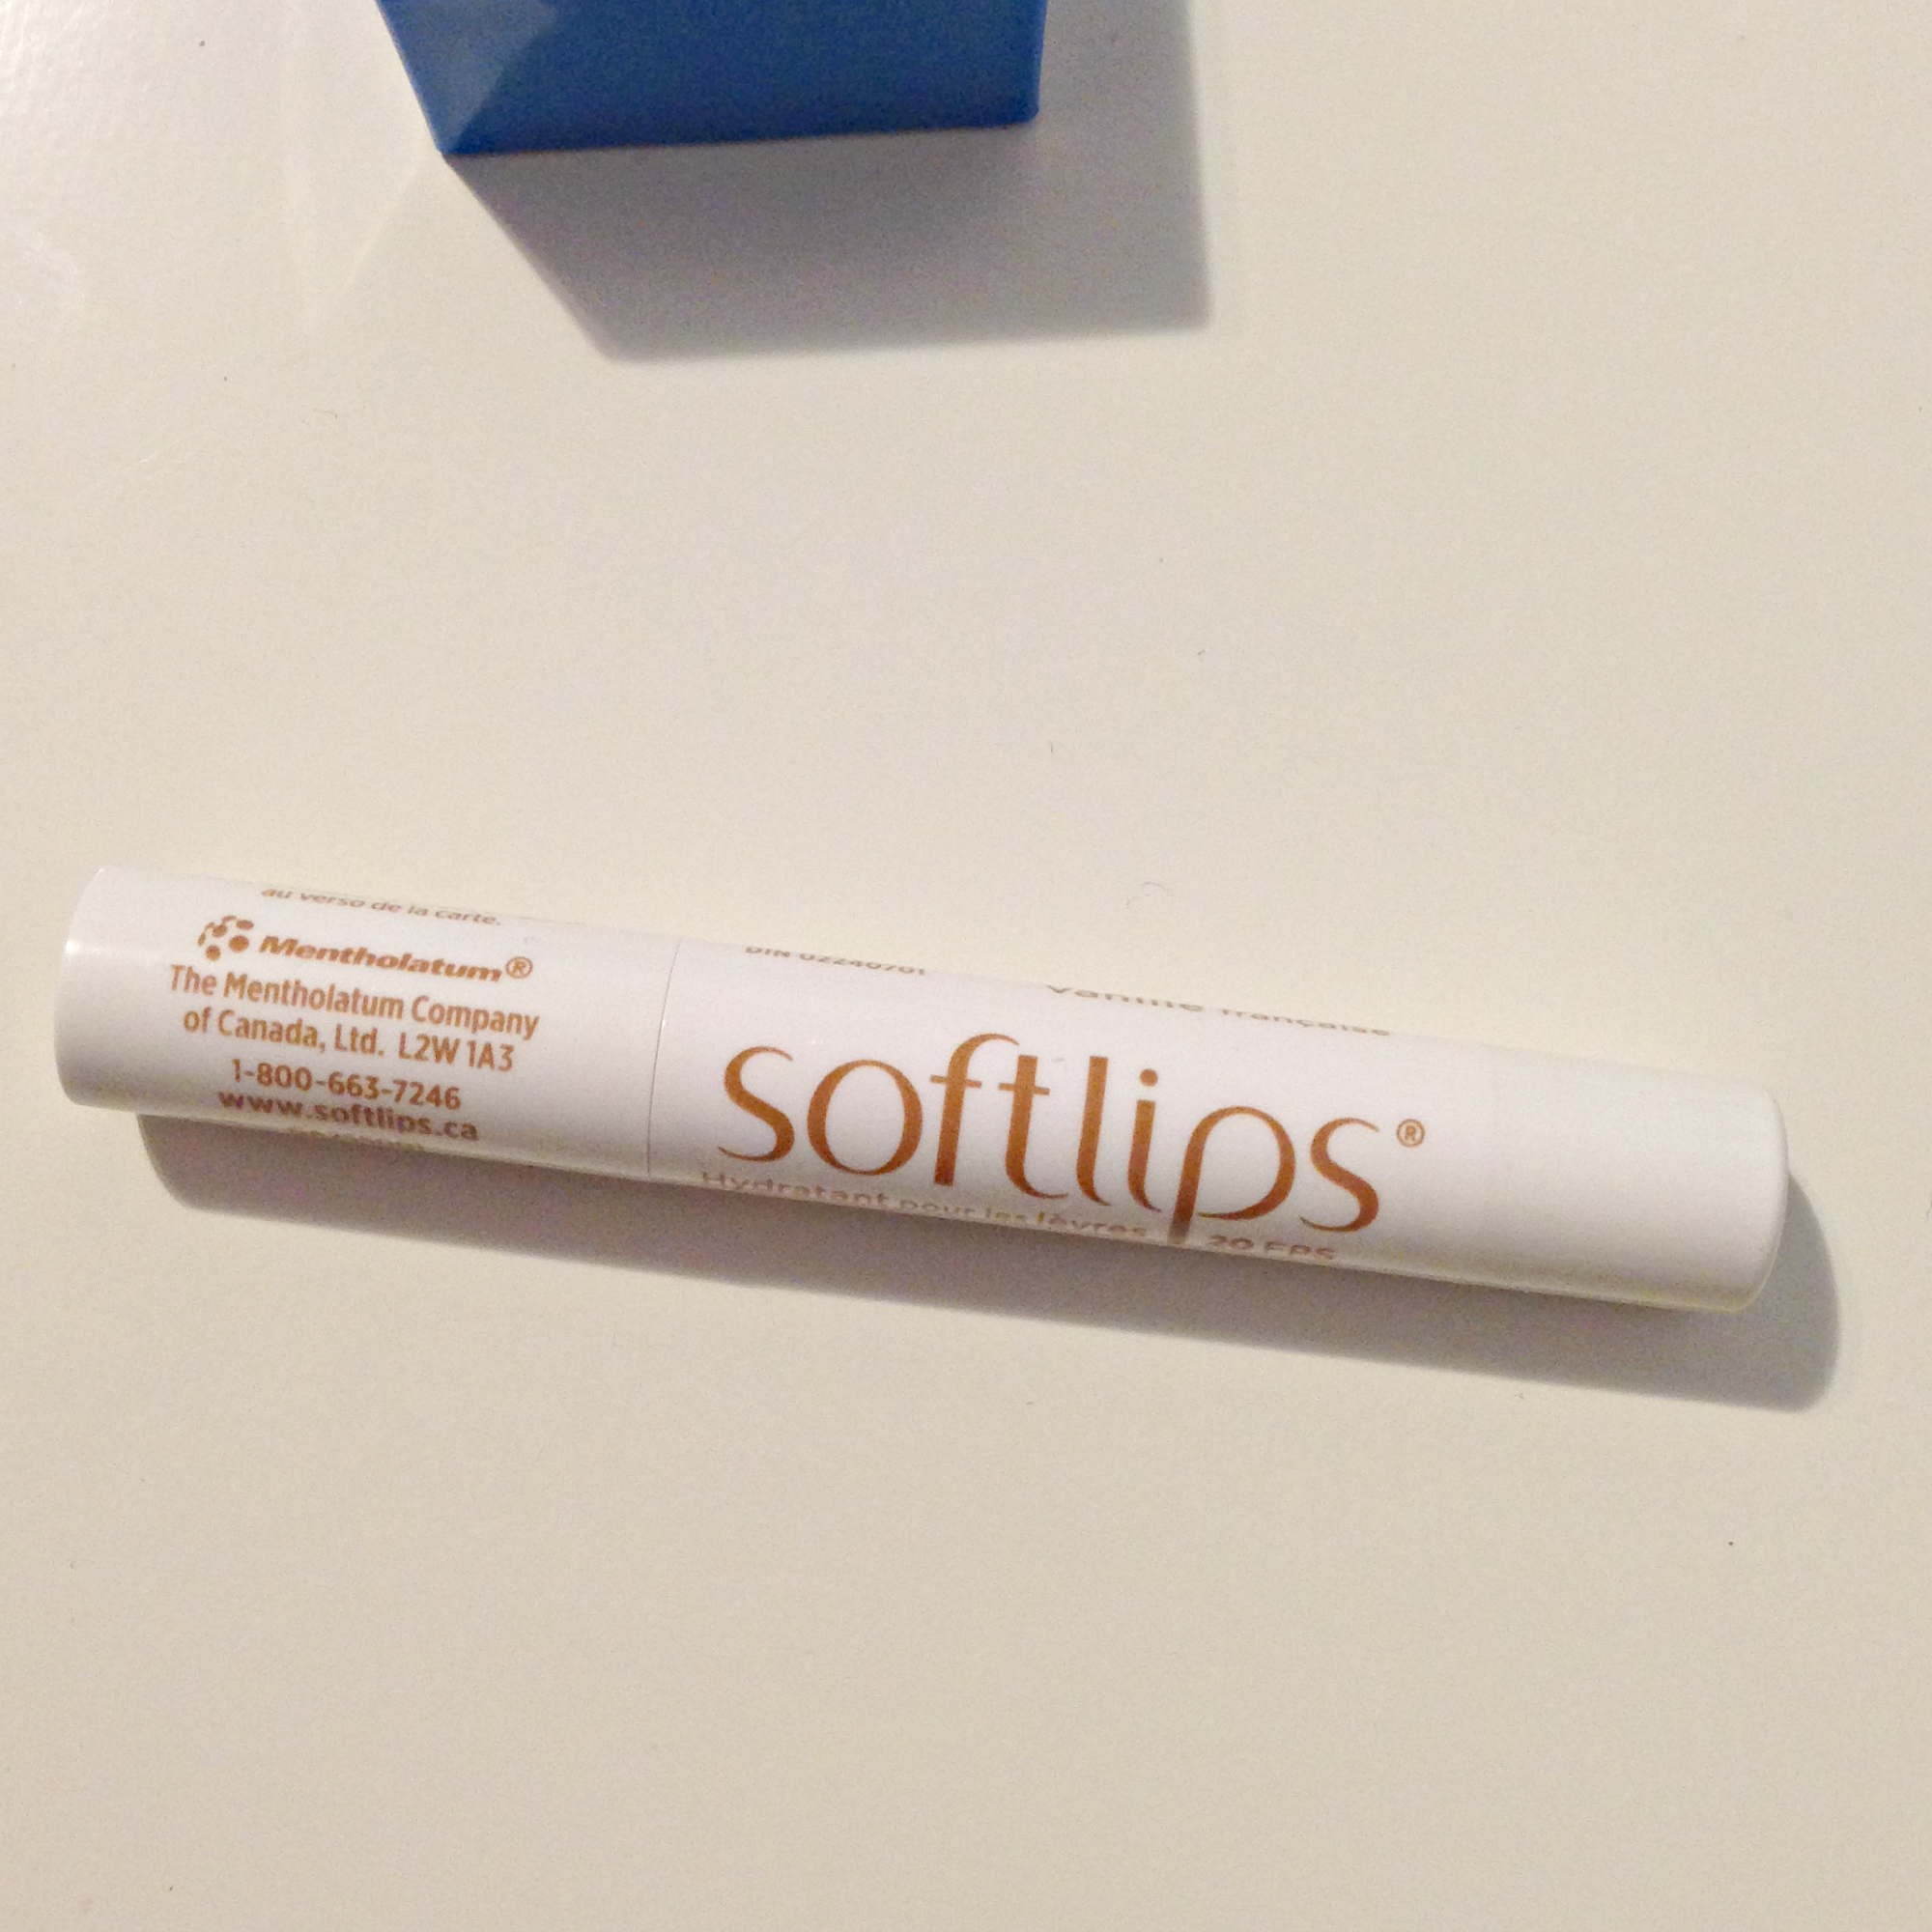 Softlips Lip Moisturizer Review